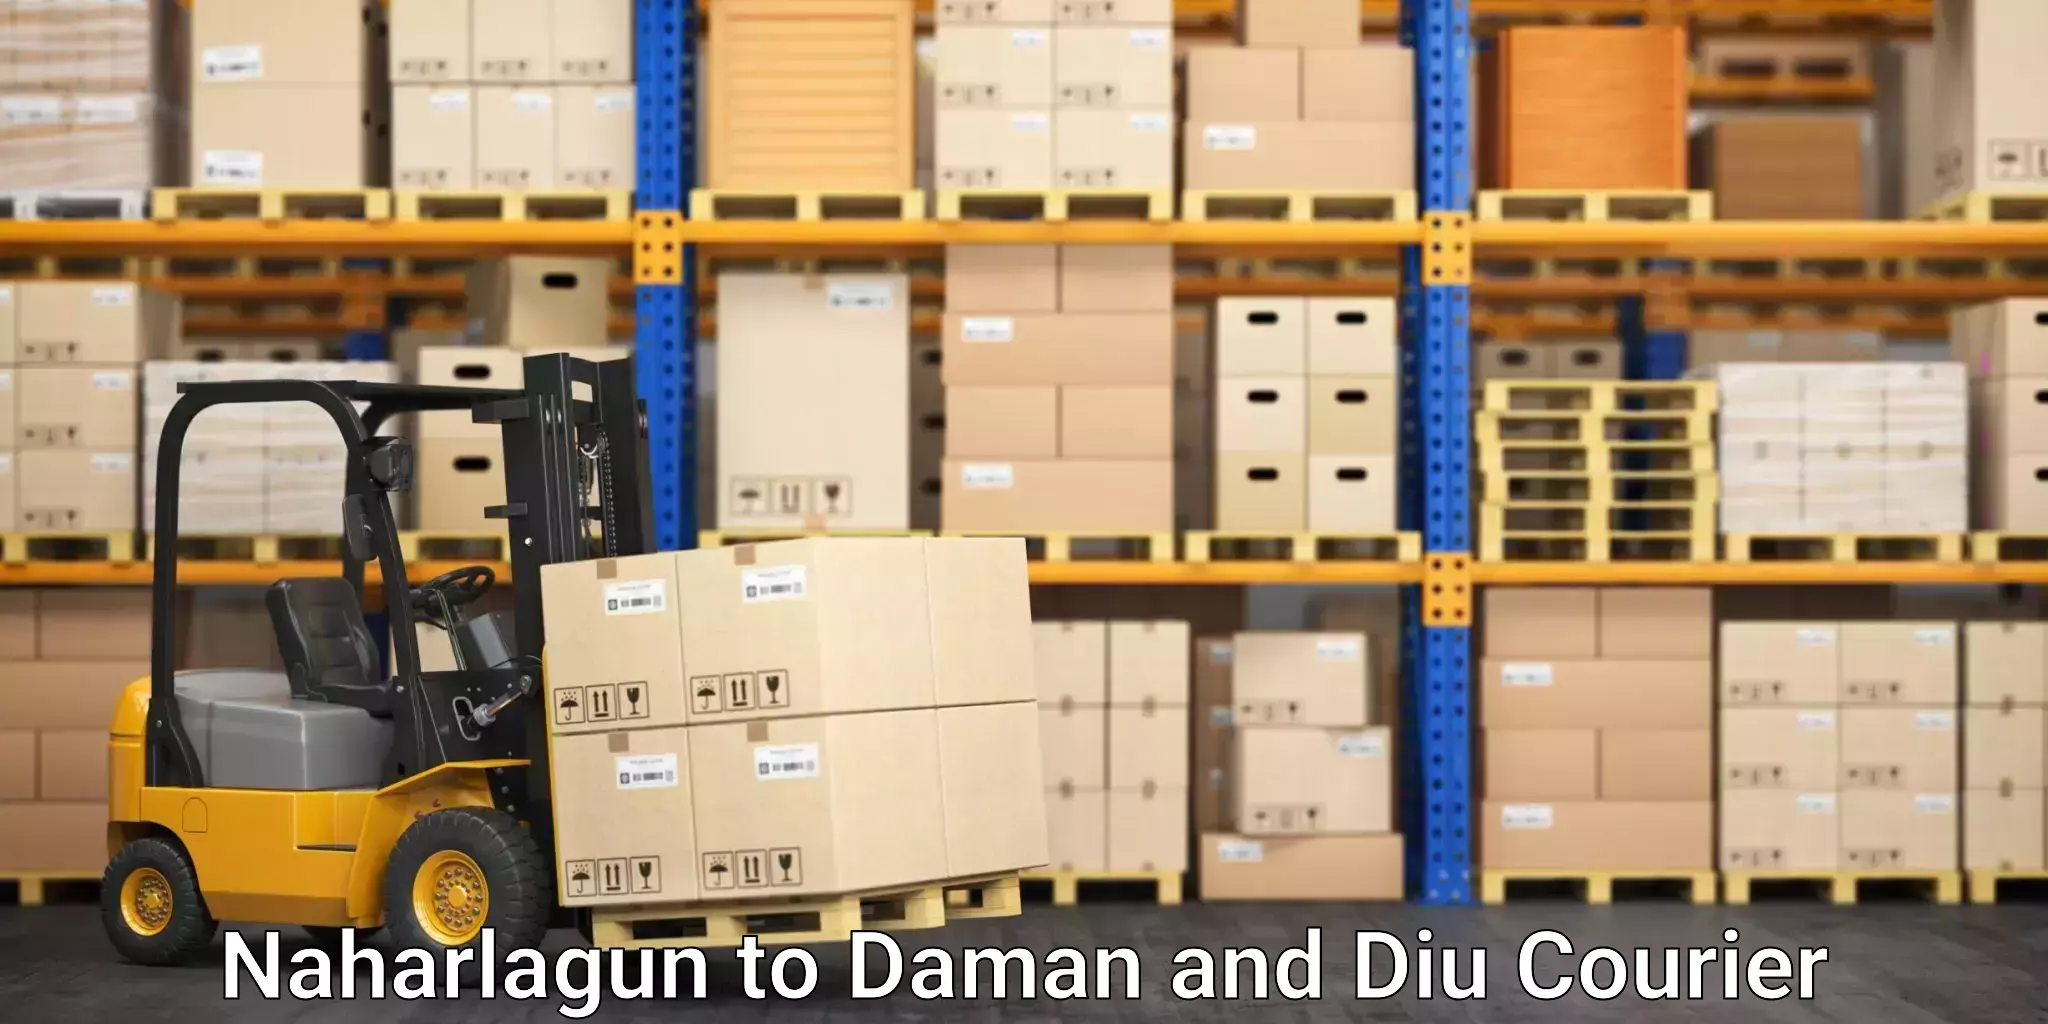 Small business couriers Naharlagun to Daman and Diu